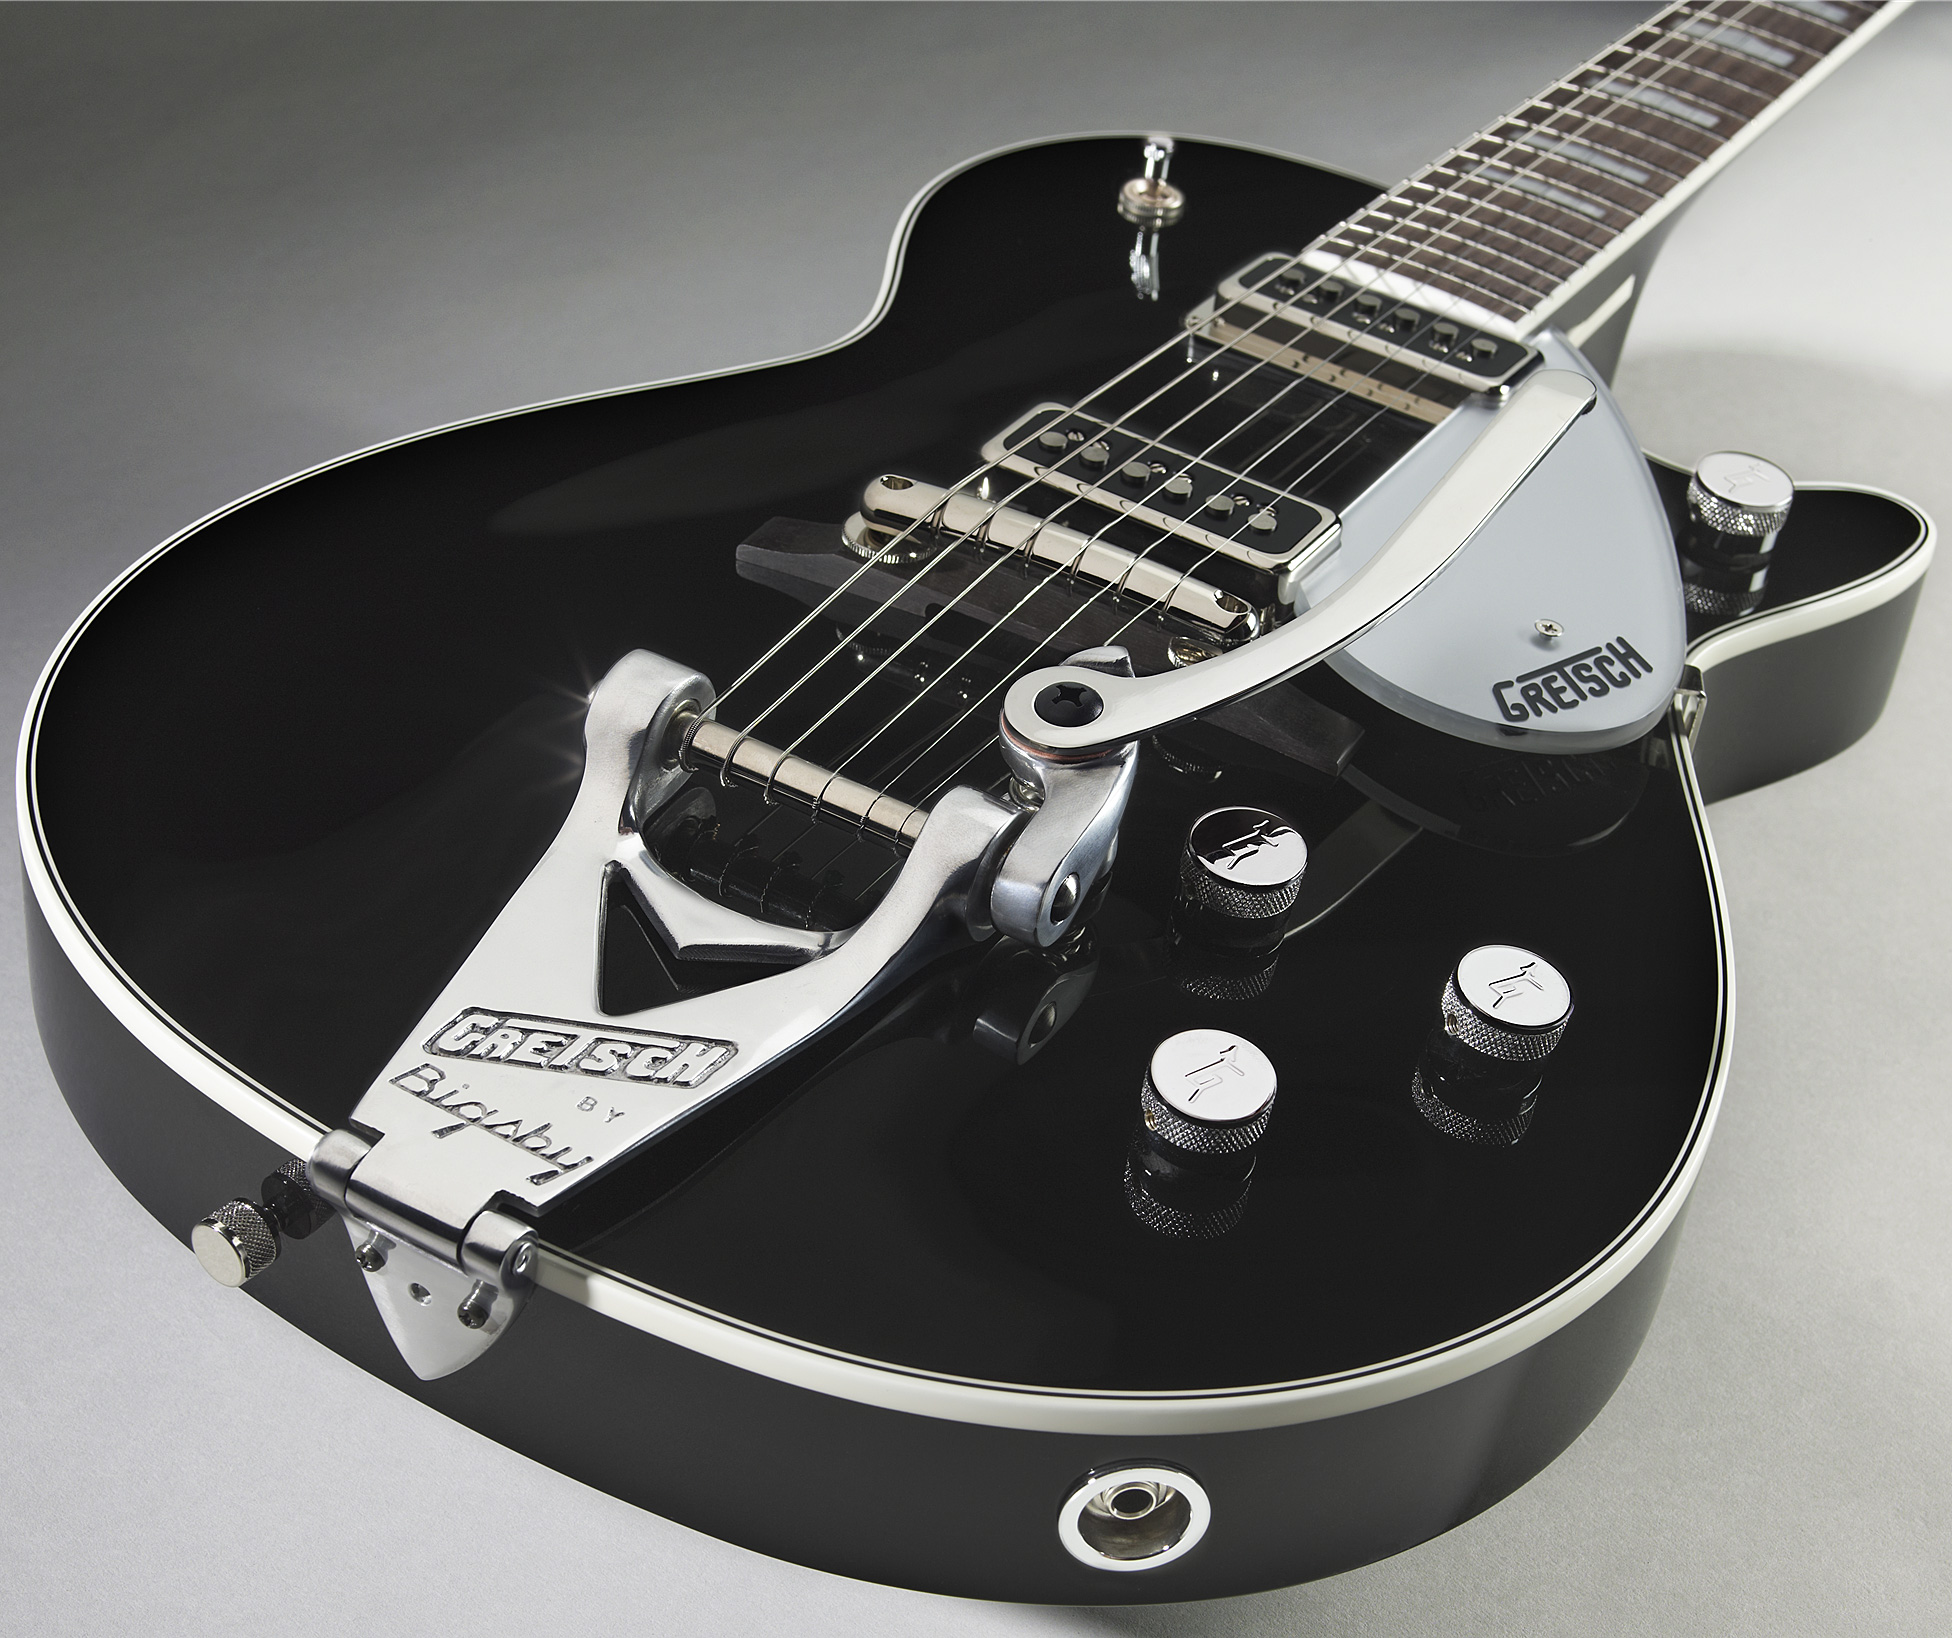 Gretsch George Harrison G6128t-gh Signature Duo Jet - Black - Single cut electric guitar - Variation 2